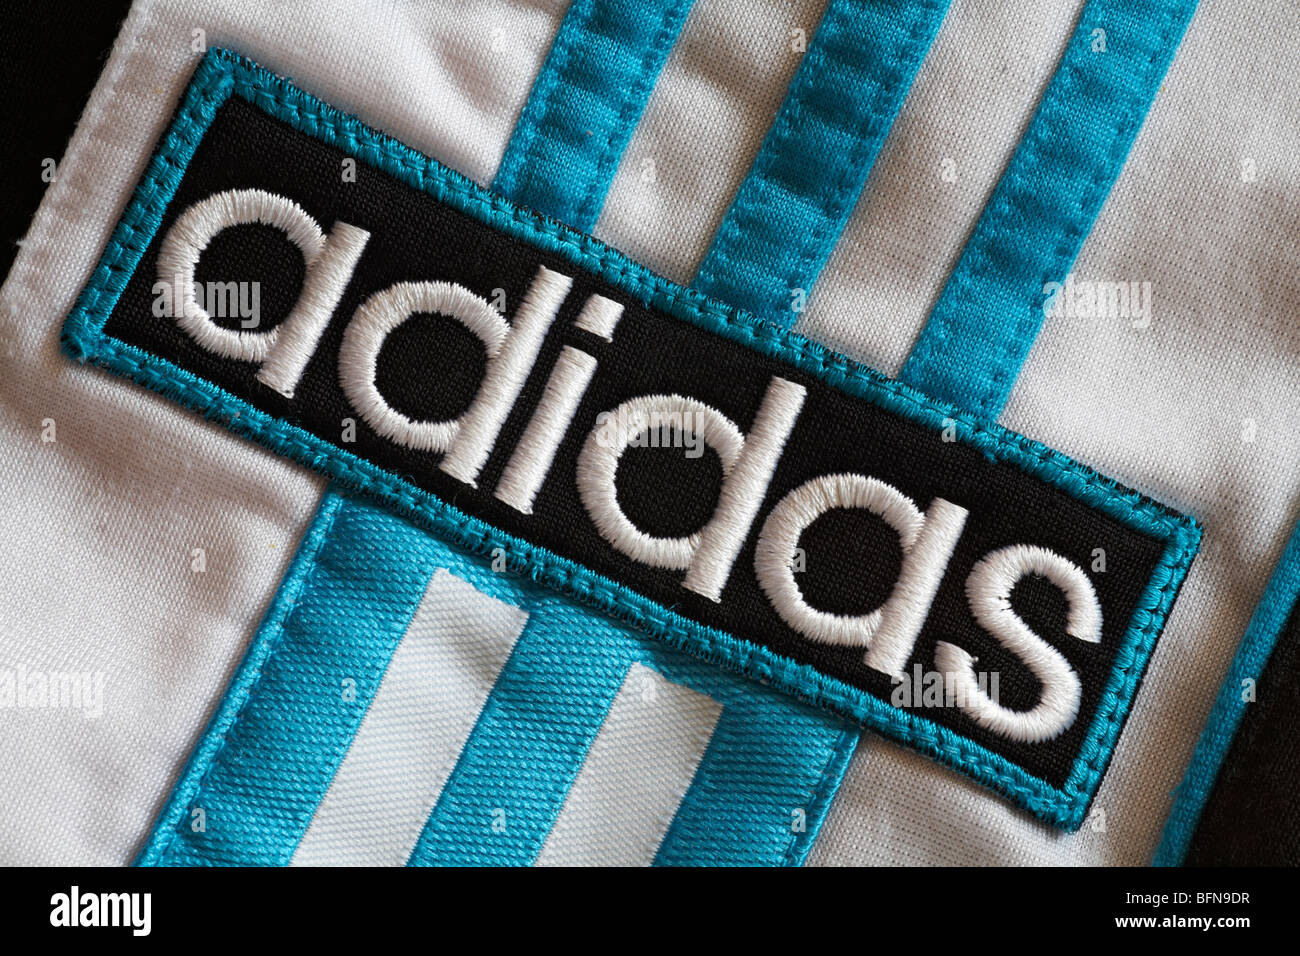 Adidas logo on tracksuit bottoms with three stripes Stock Photo - Alamy